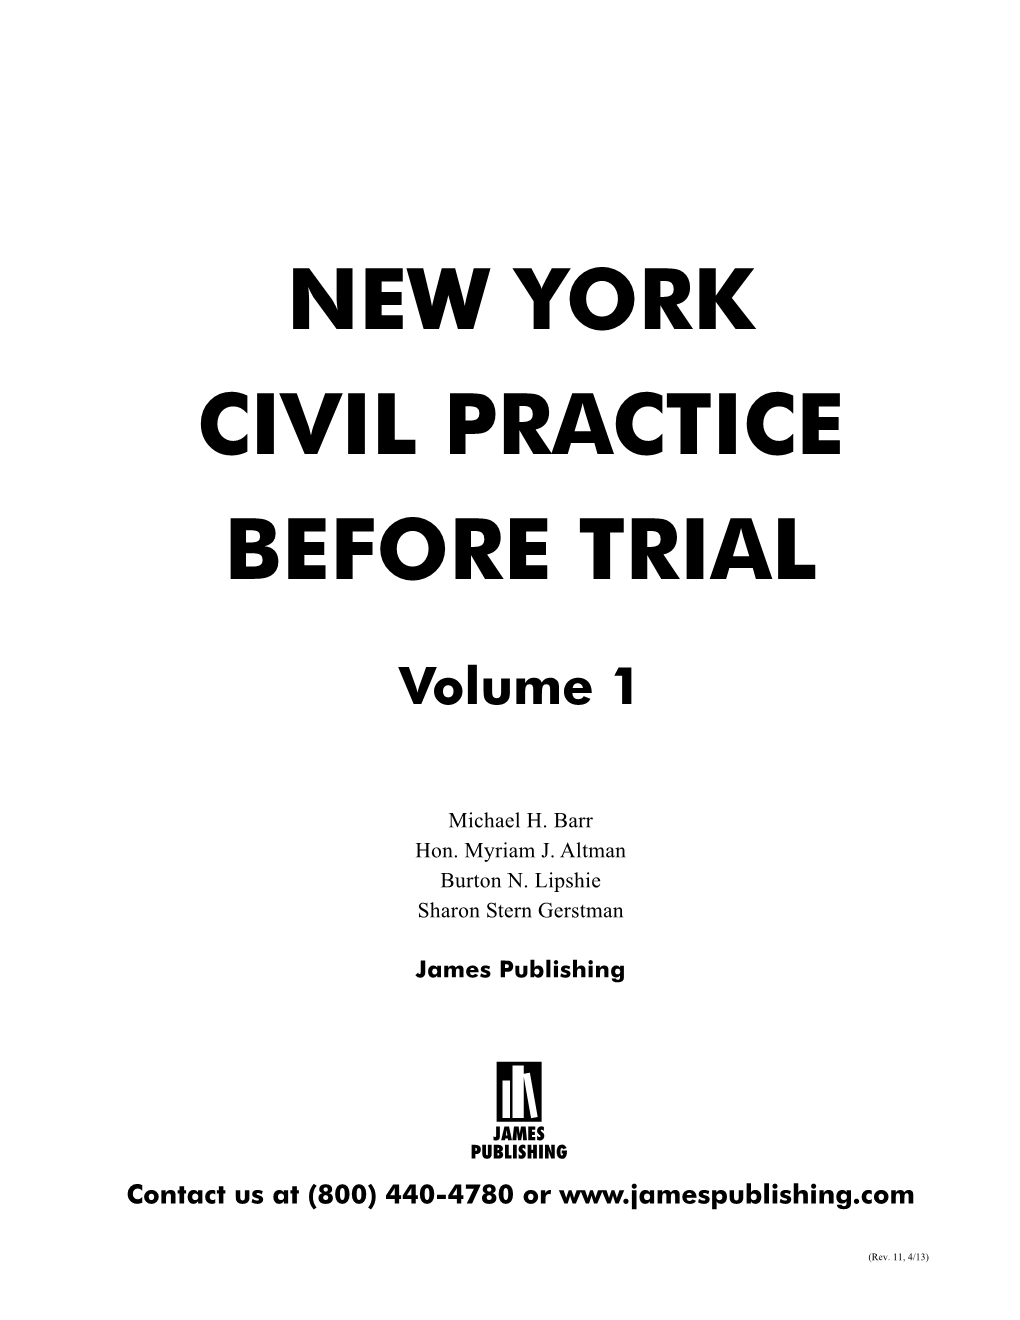 New York Civil Practice Before Trial